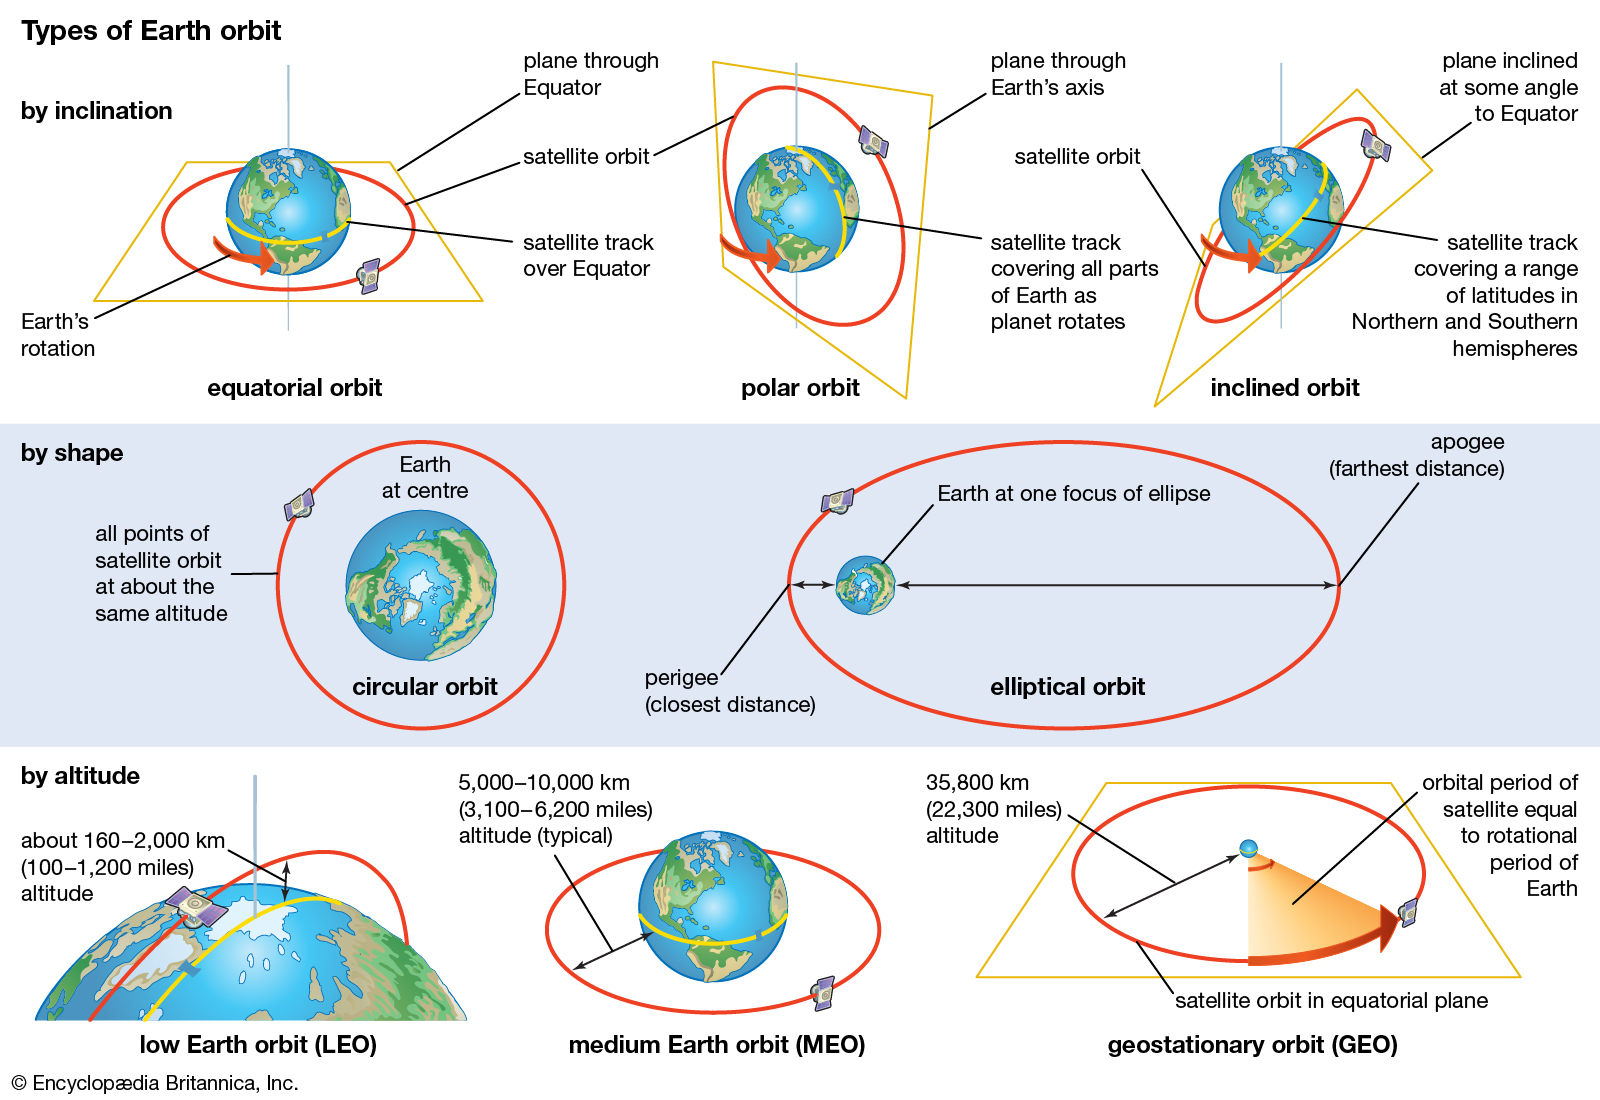 High Earth Orbit, Medium Earth Orbit, and Low Earth Orbit